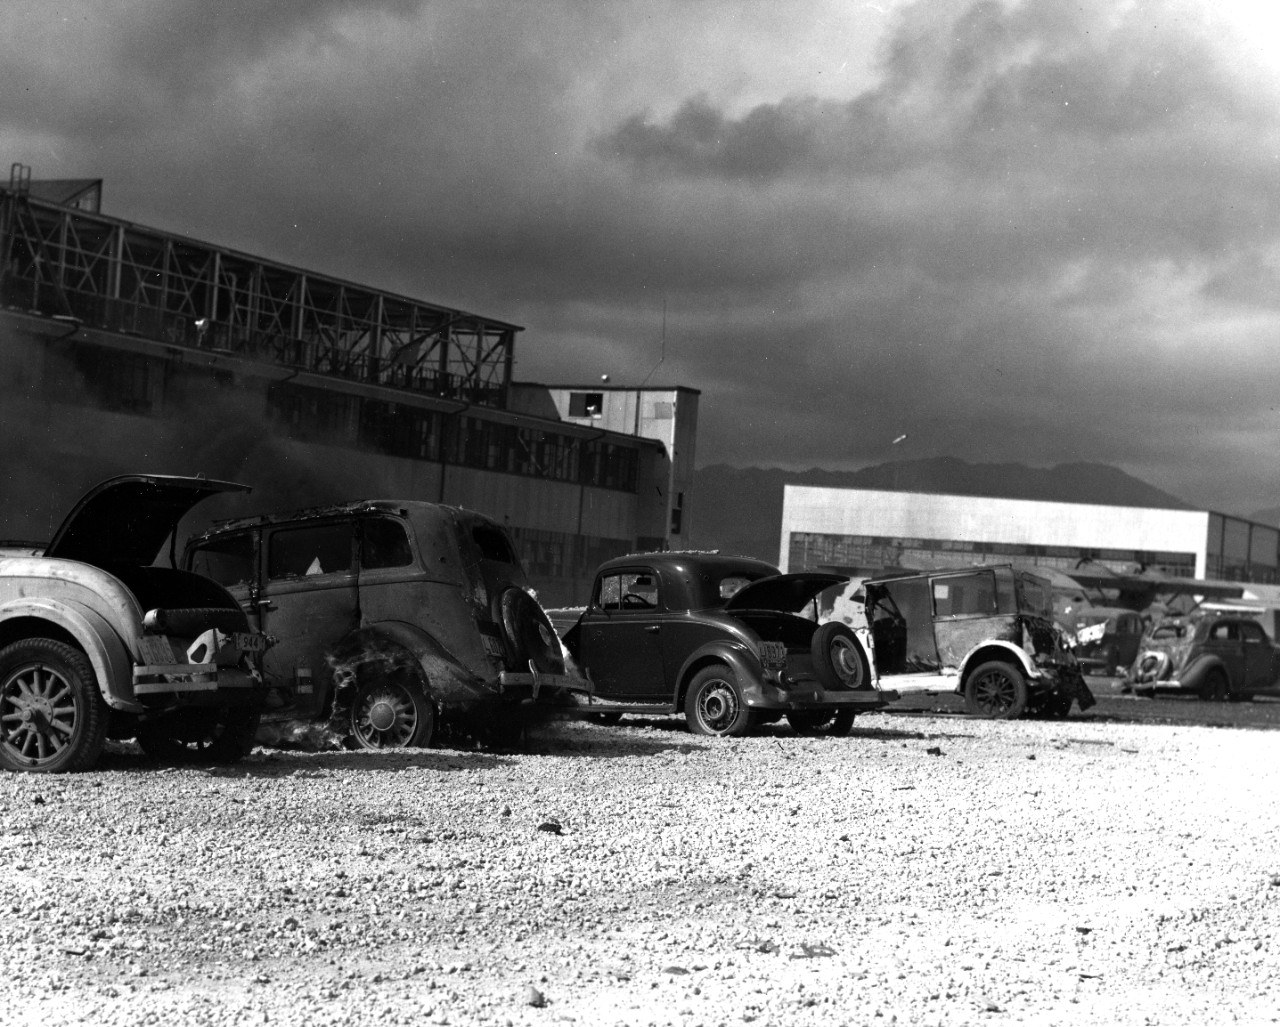 Pearl Harbor Attack, 7 December 1941